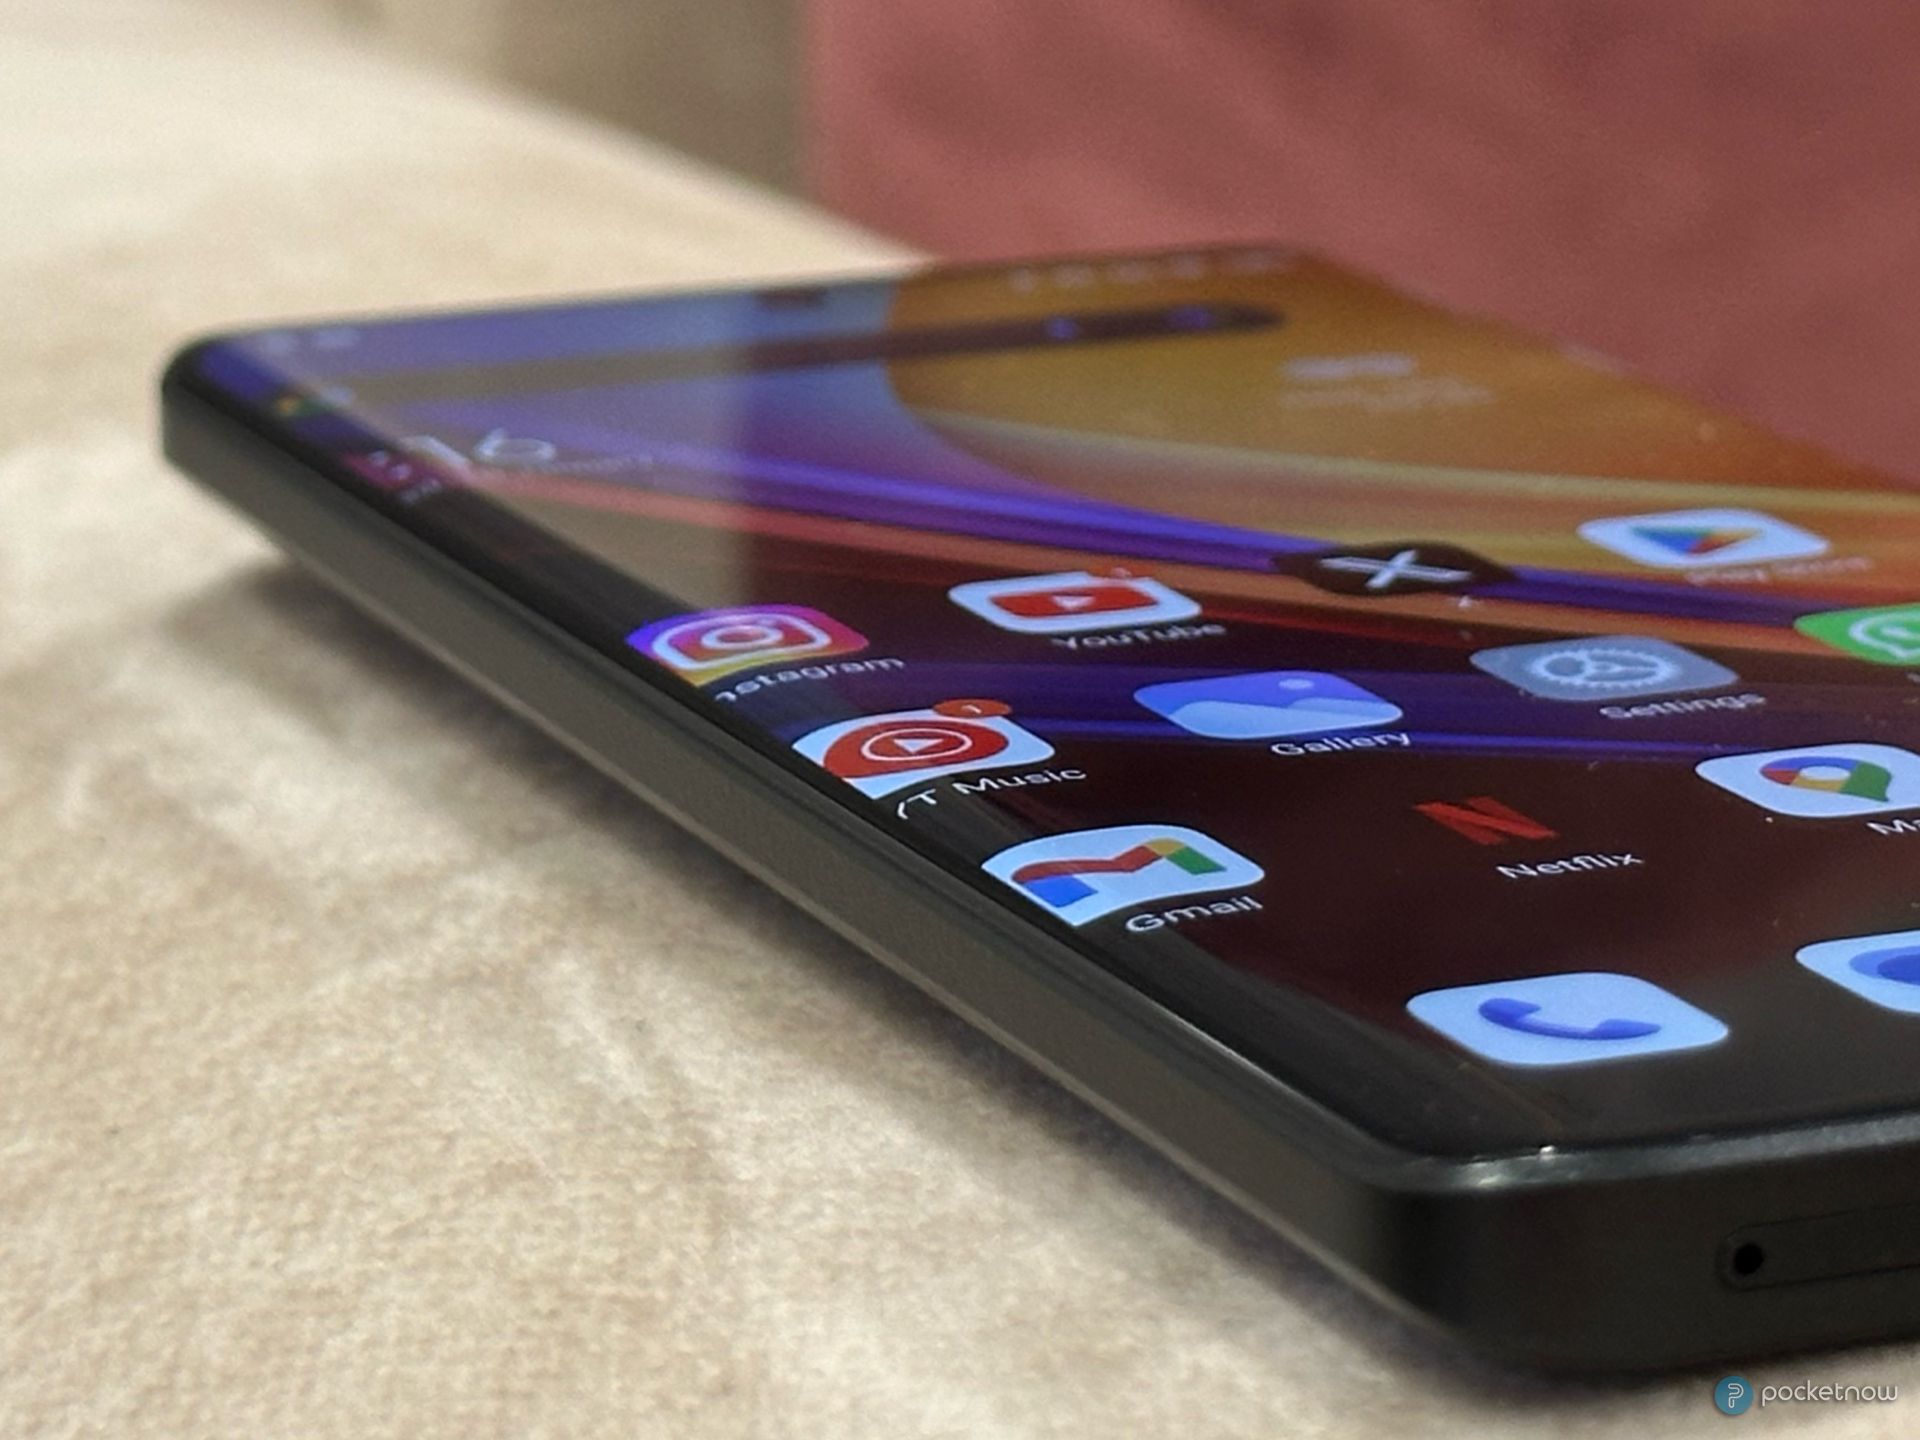 Meet Redmi Note 13 Pro Plus 5G 